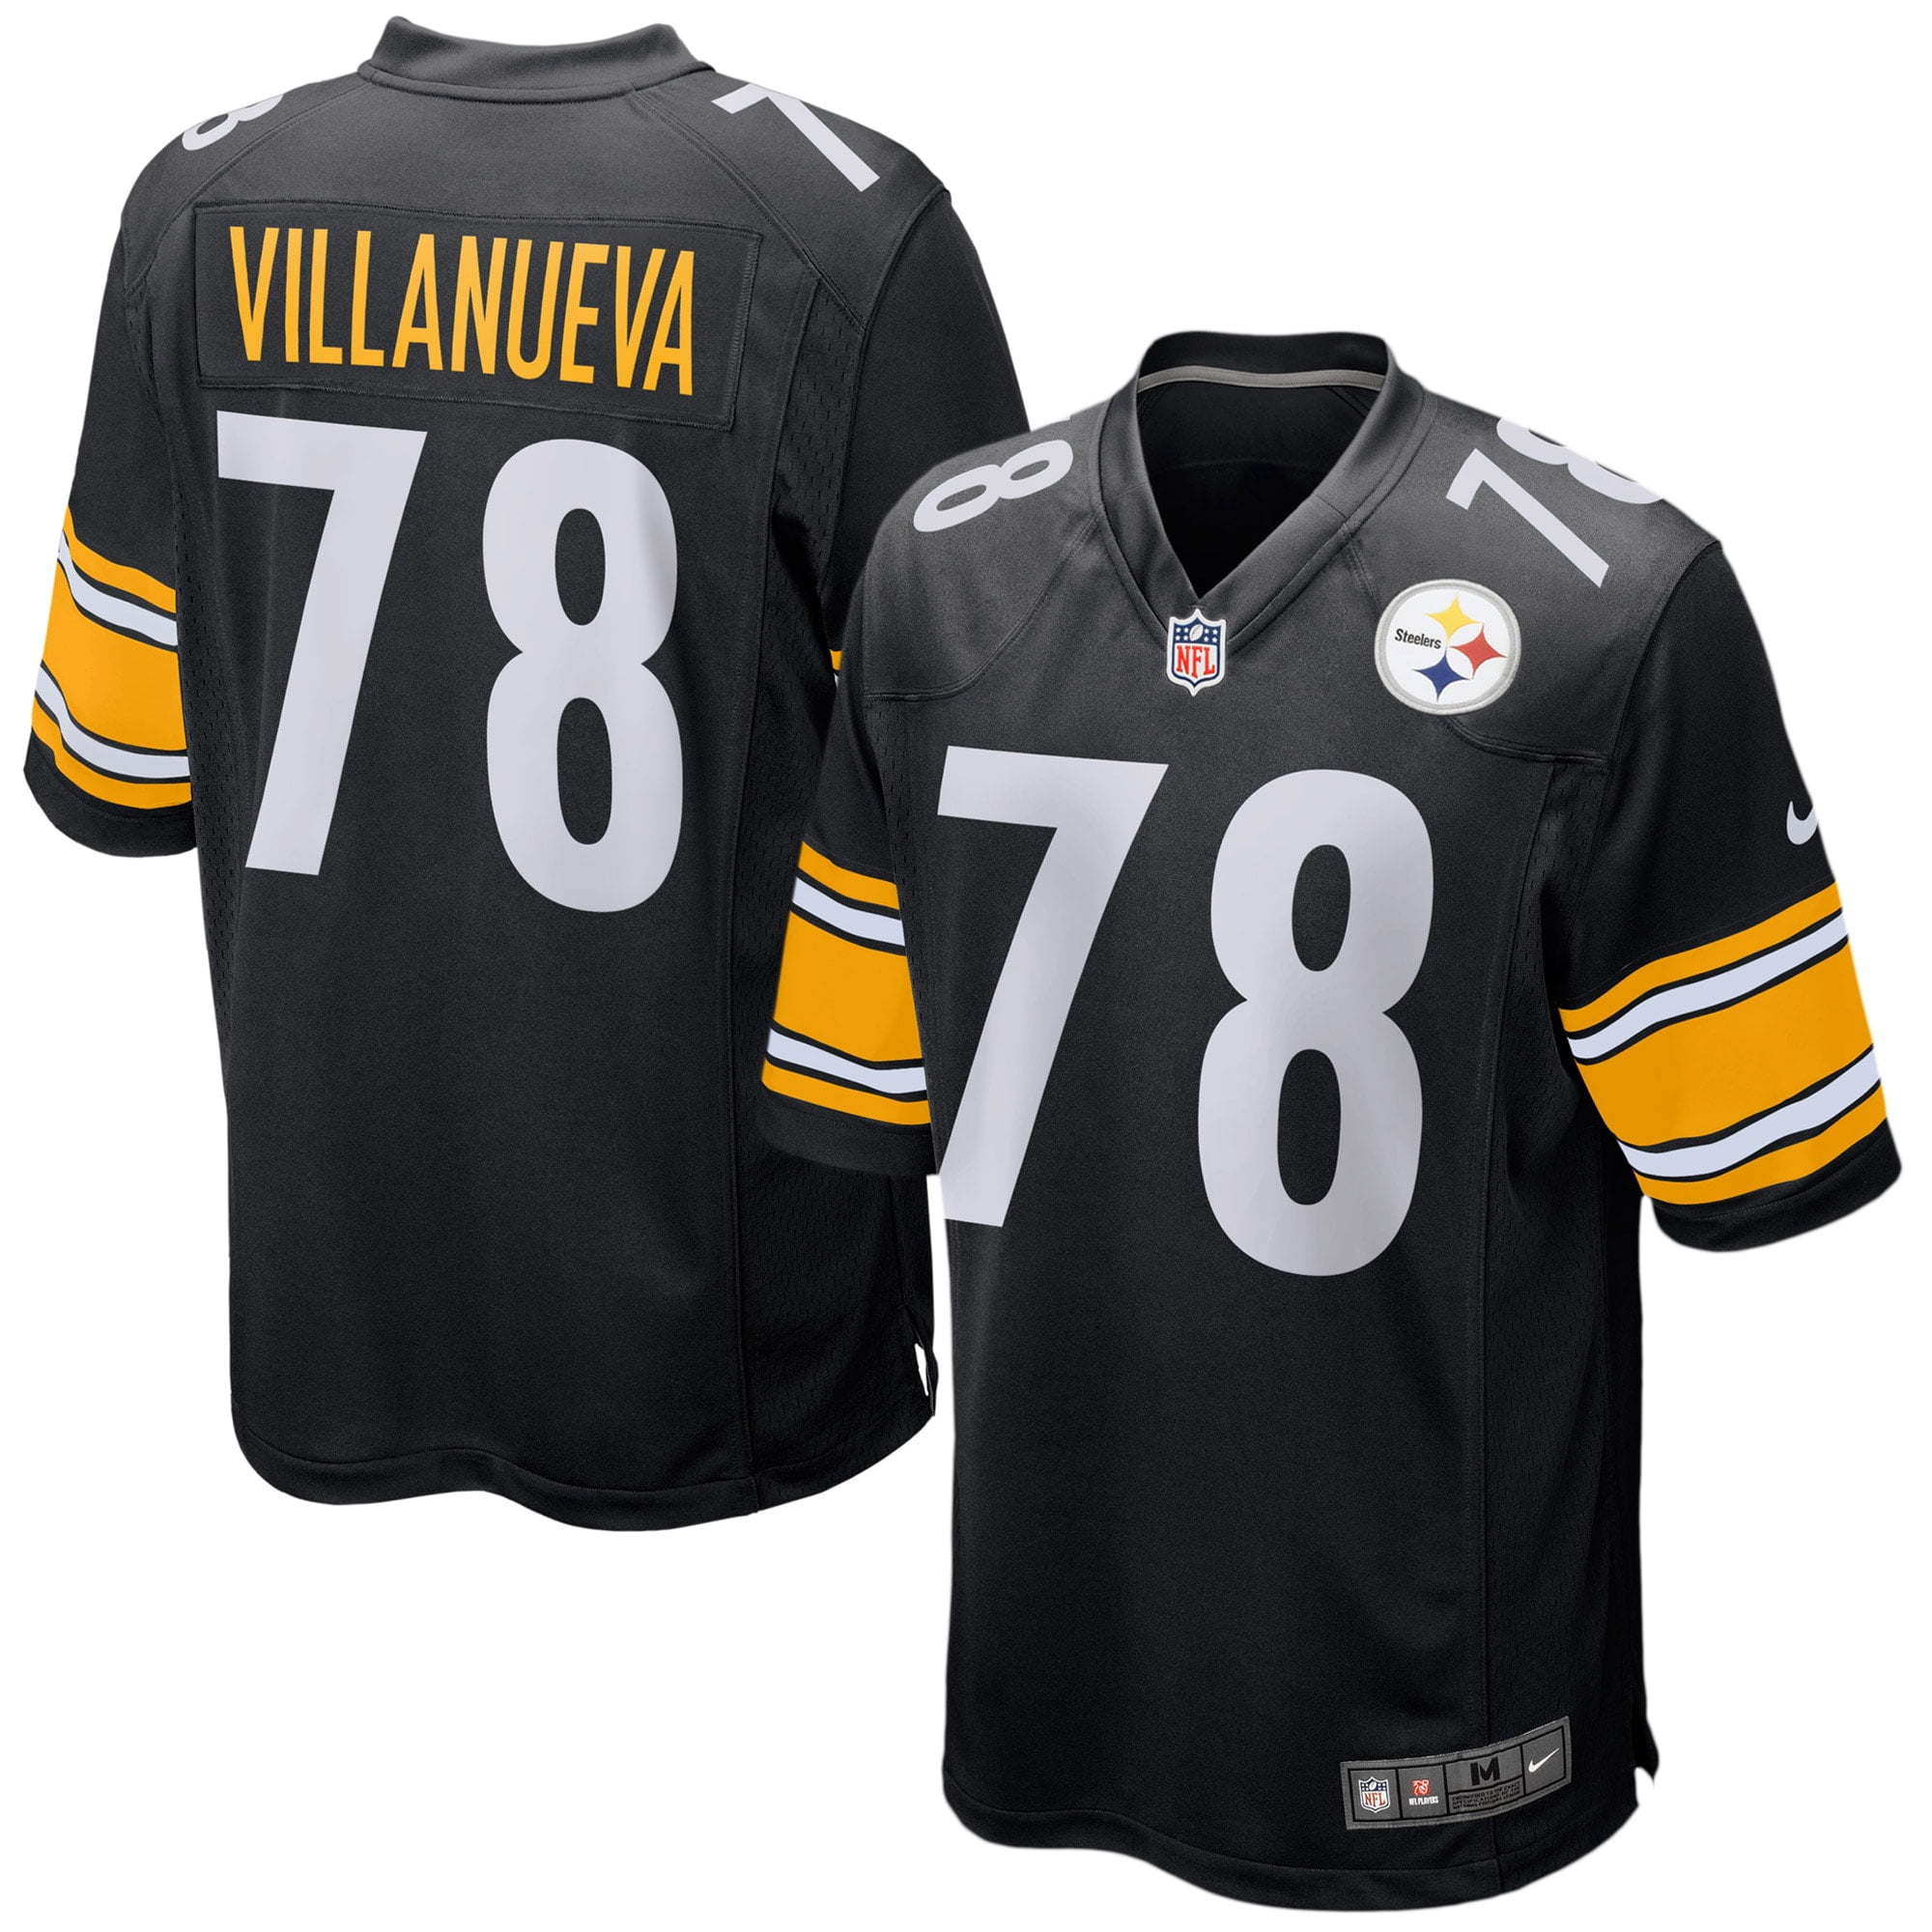 Alejandro Villanueva Pittsburgh Steelers Nike Youth Game Jersey - Black - Walmart.com ...